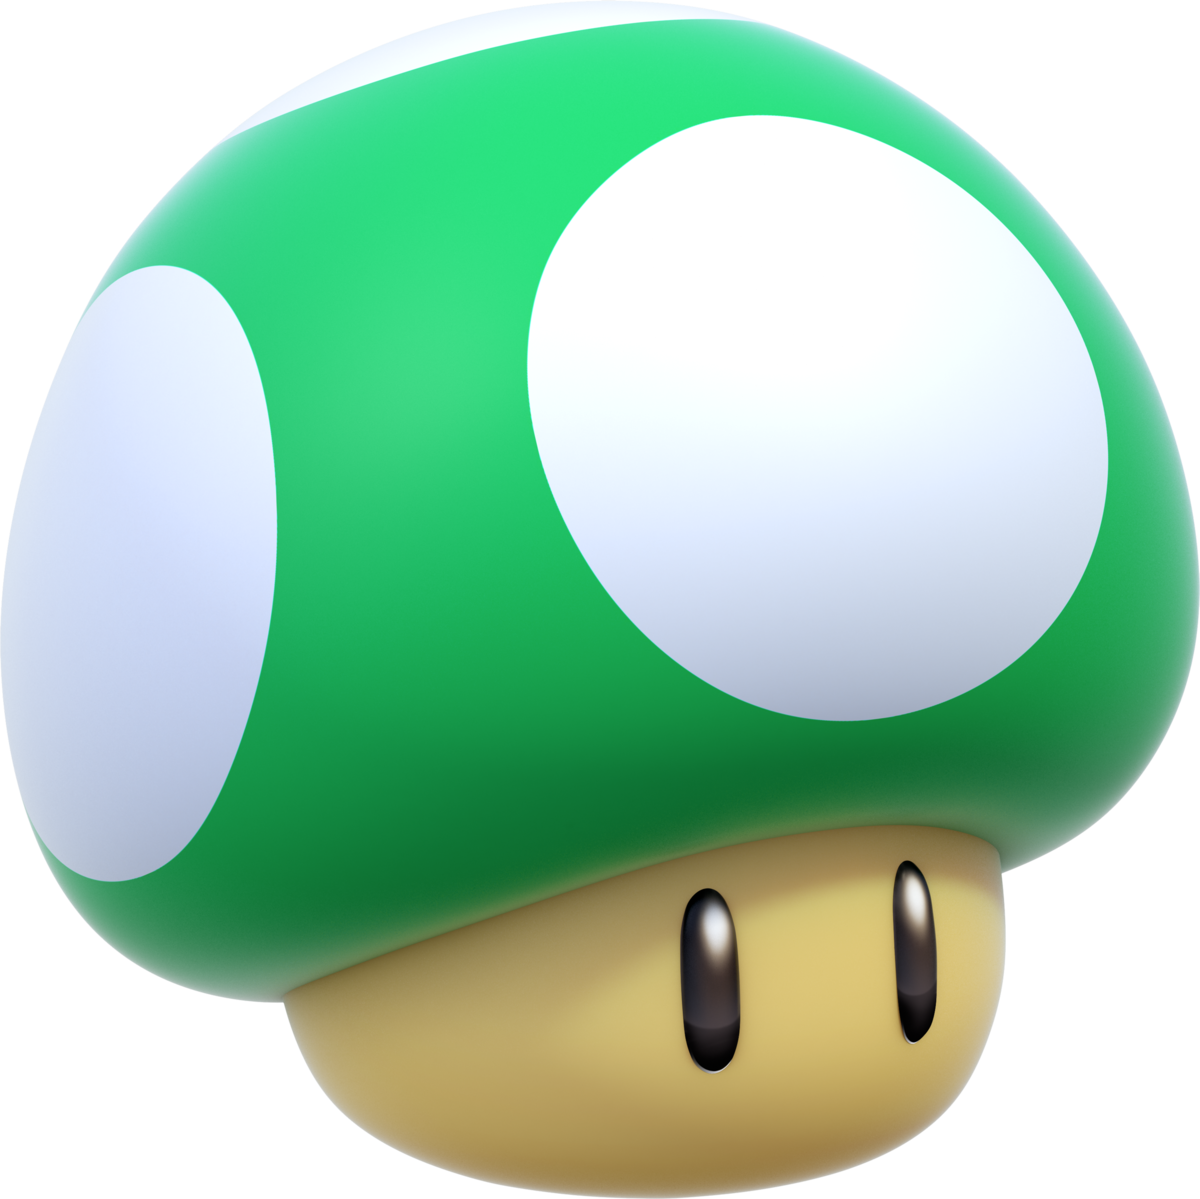 1-Up Mushroom - Super Mario Wiki, the Mario encyclopedia